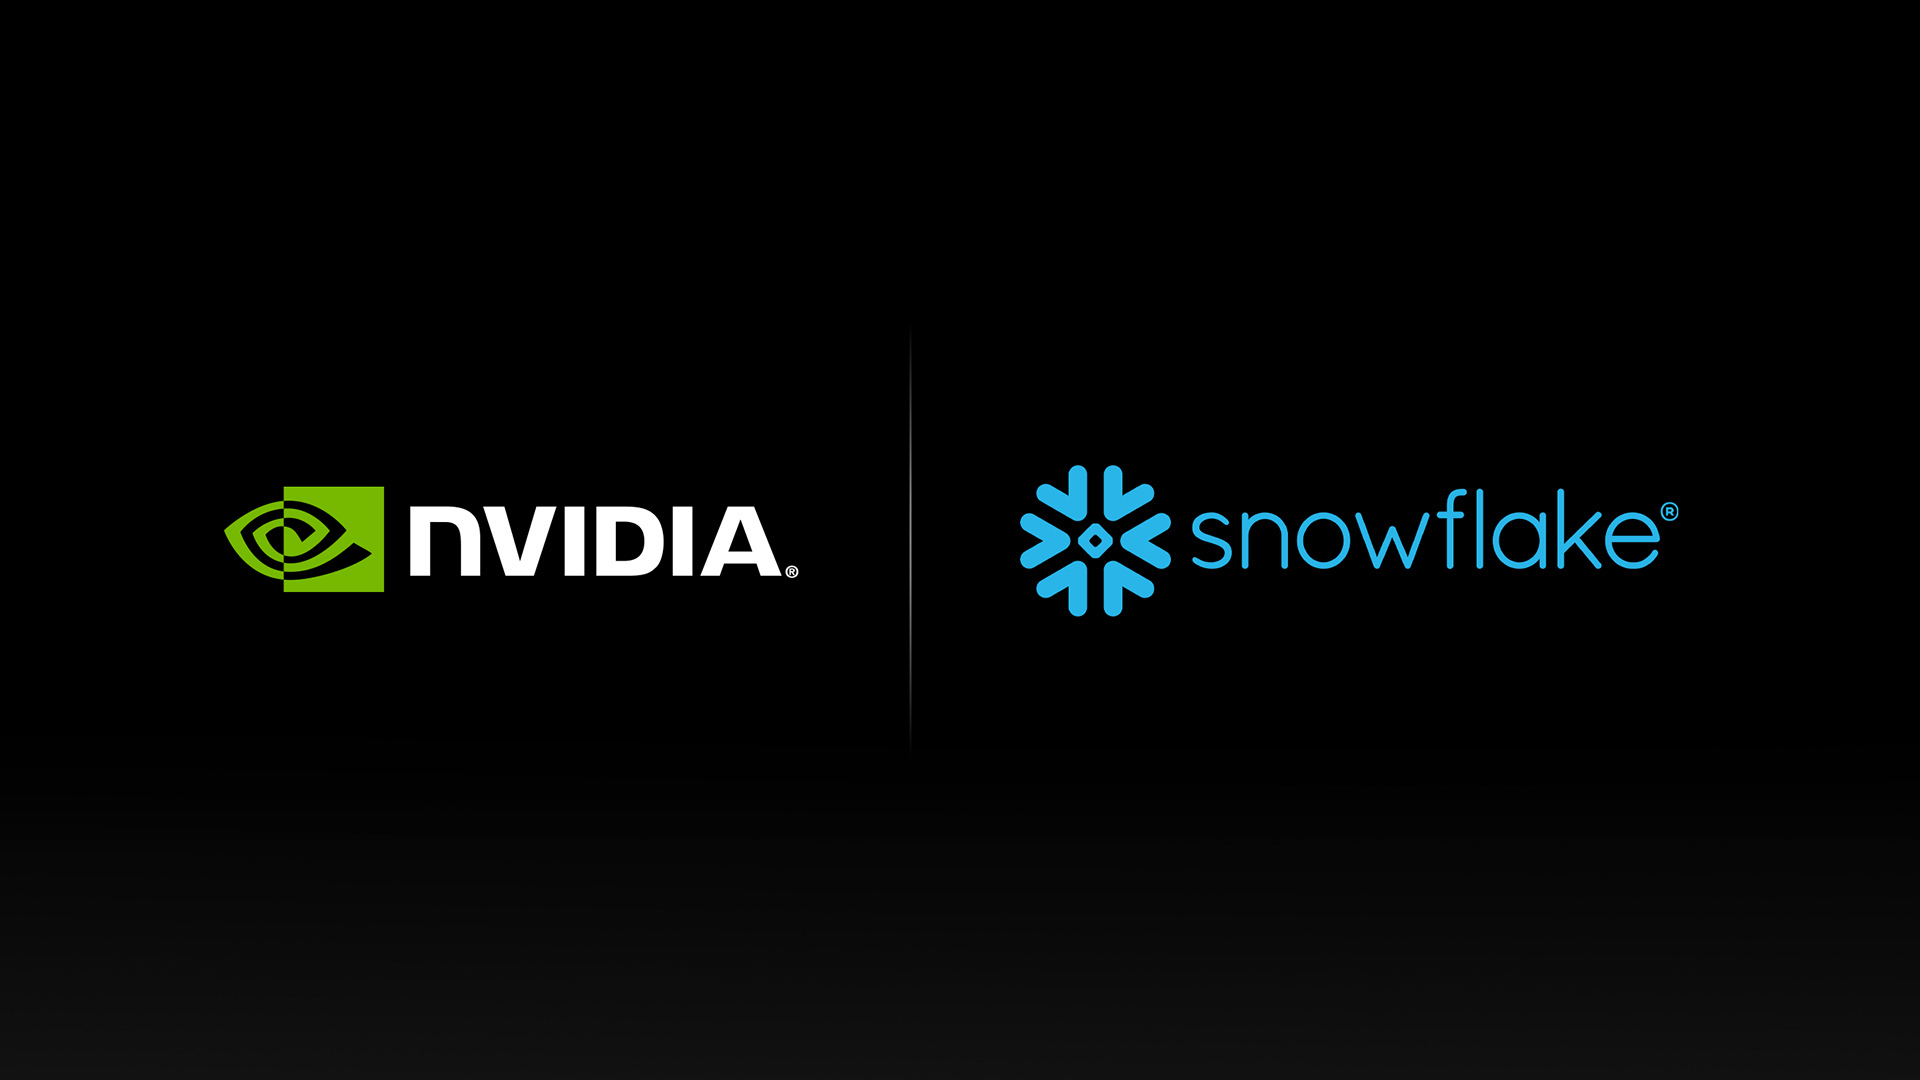 NVIDIA and Snowflake